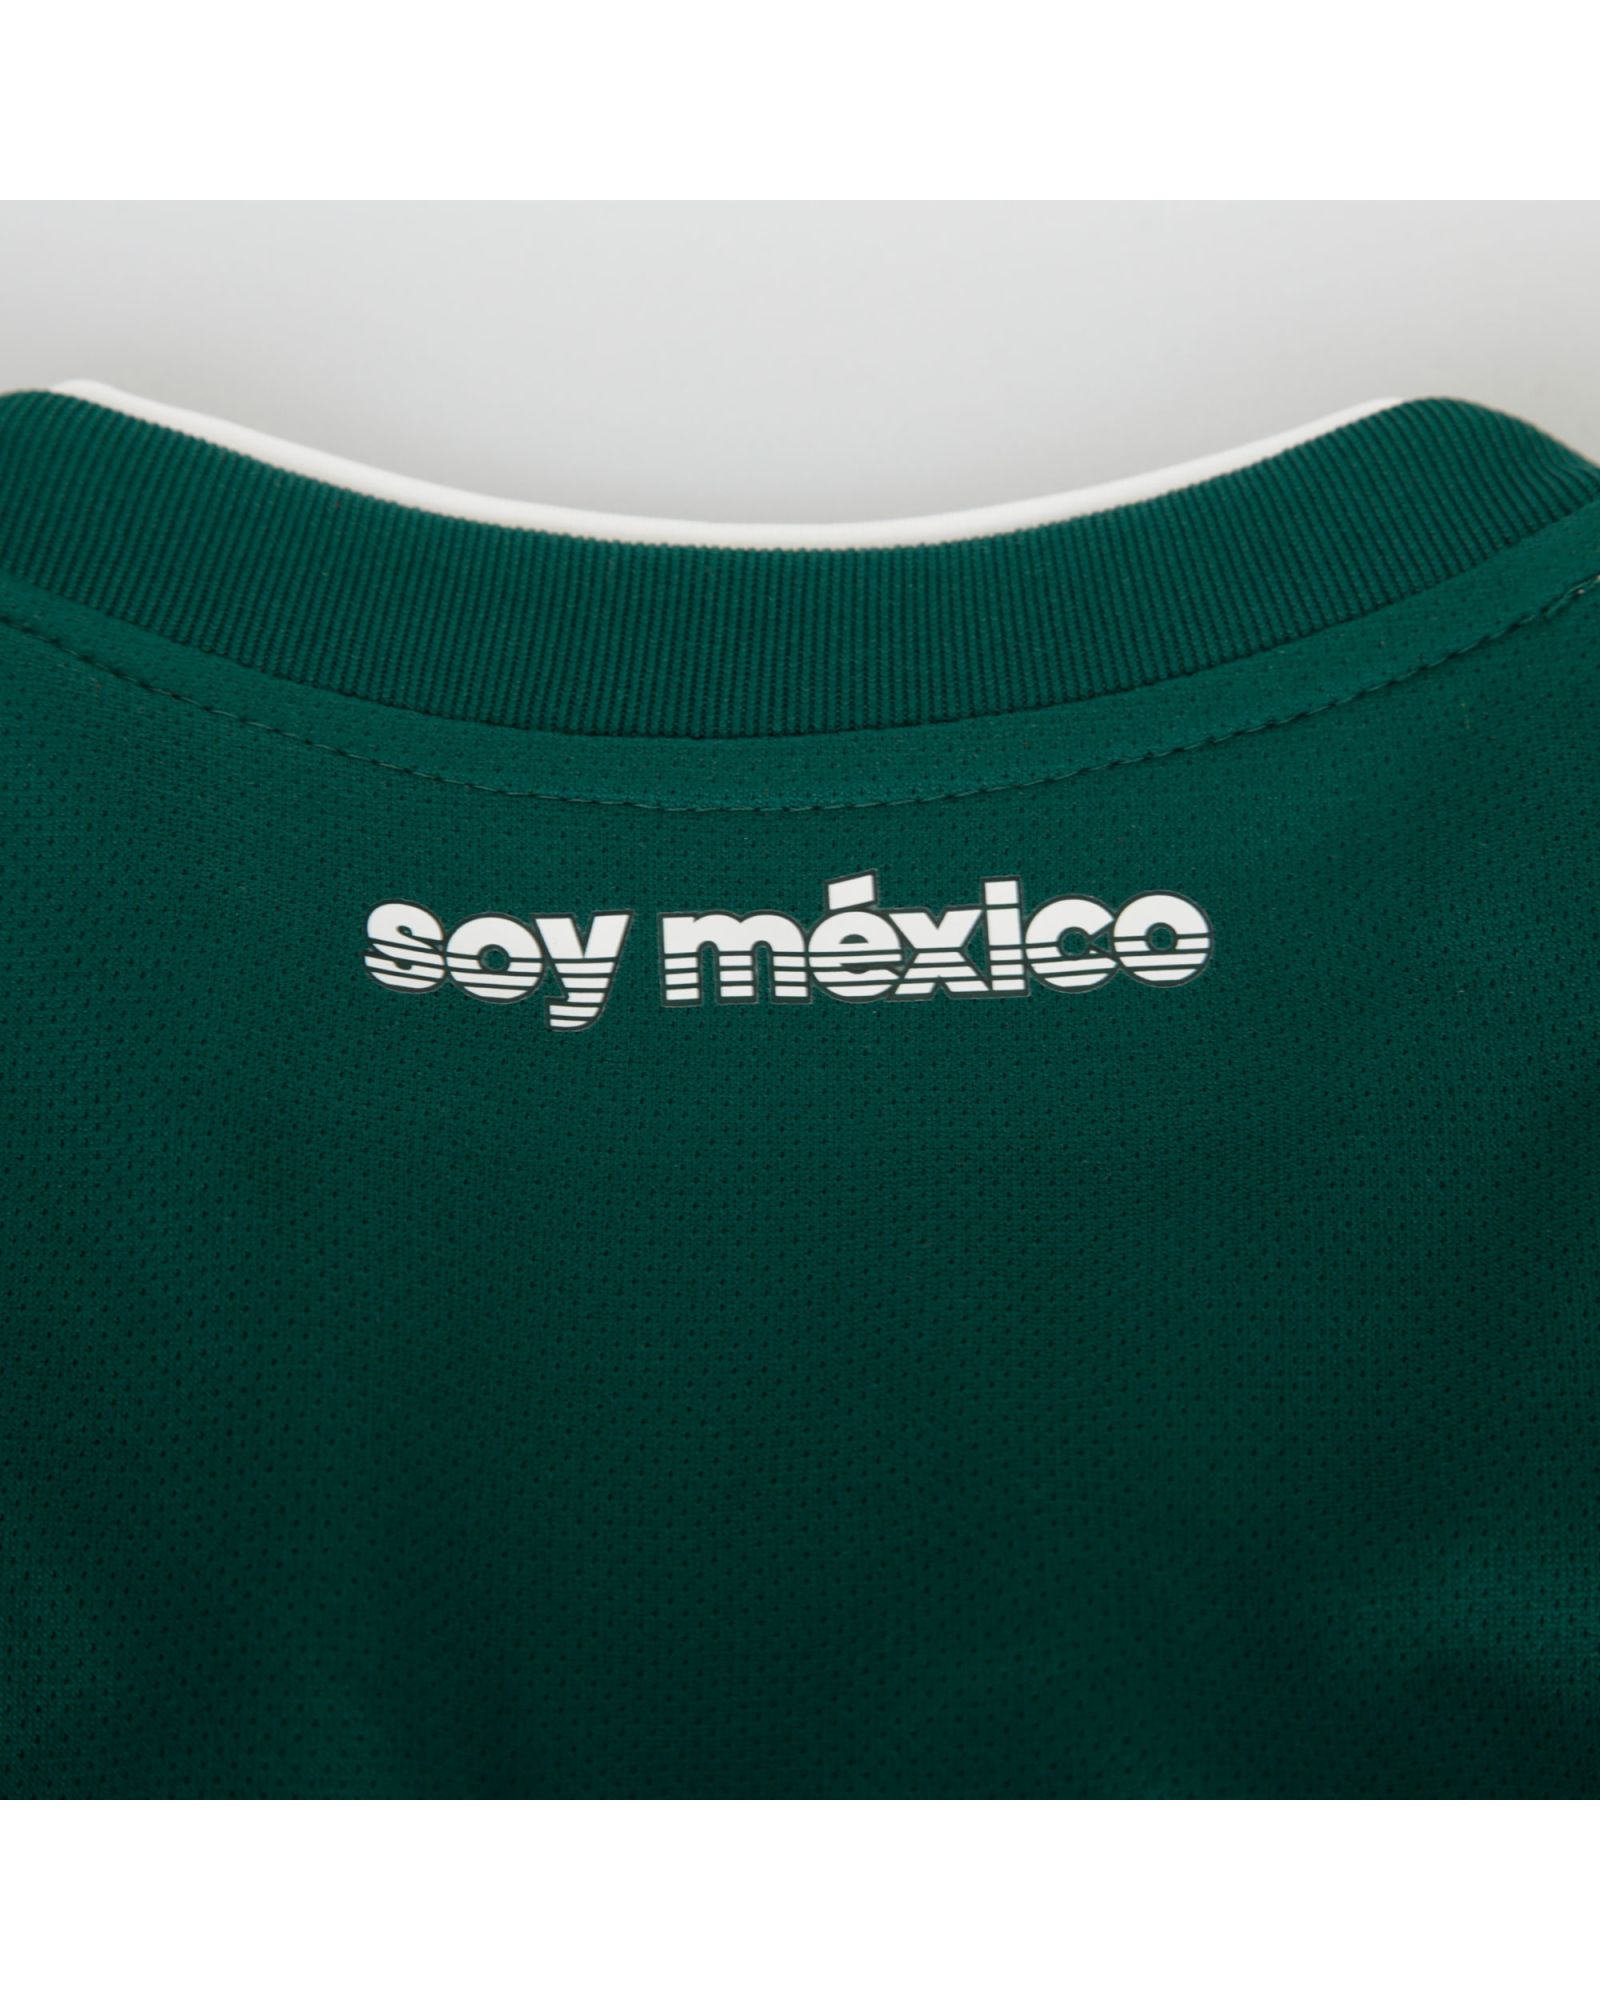 Camiseta 1ª México Mundial 2018 Verde - Fútbol Factory